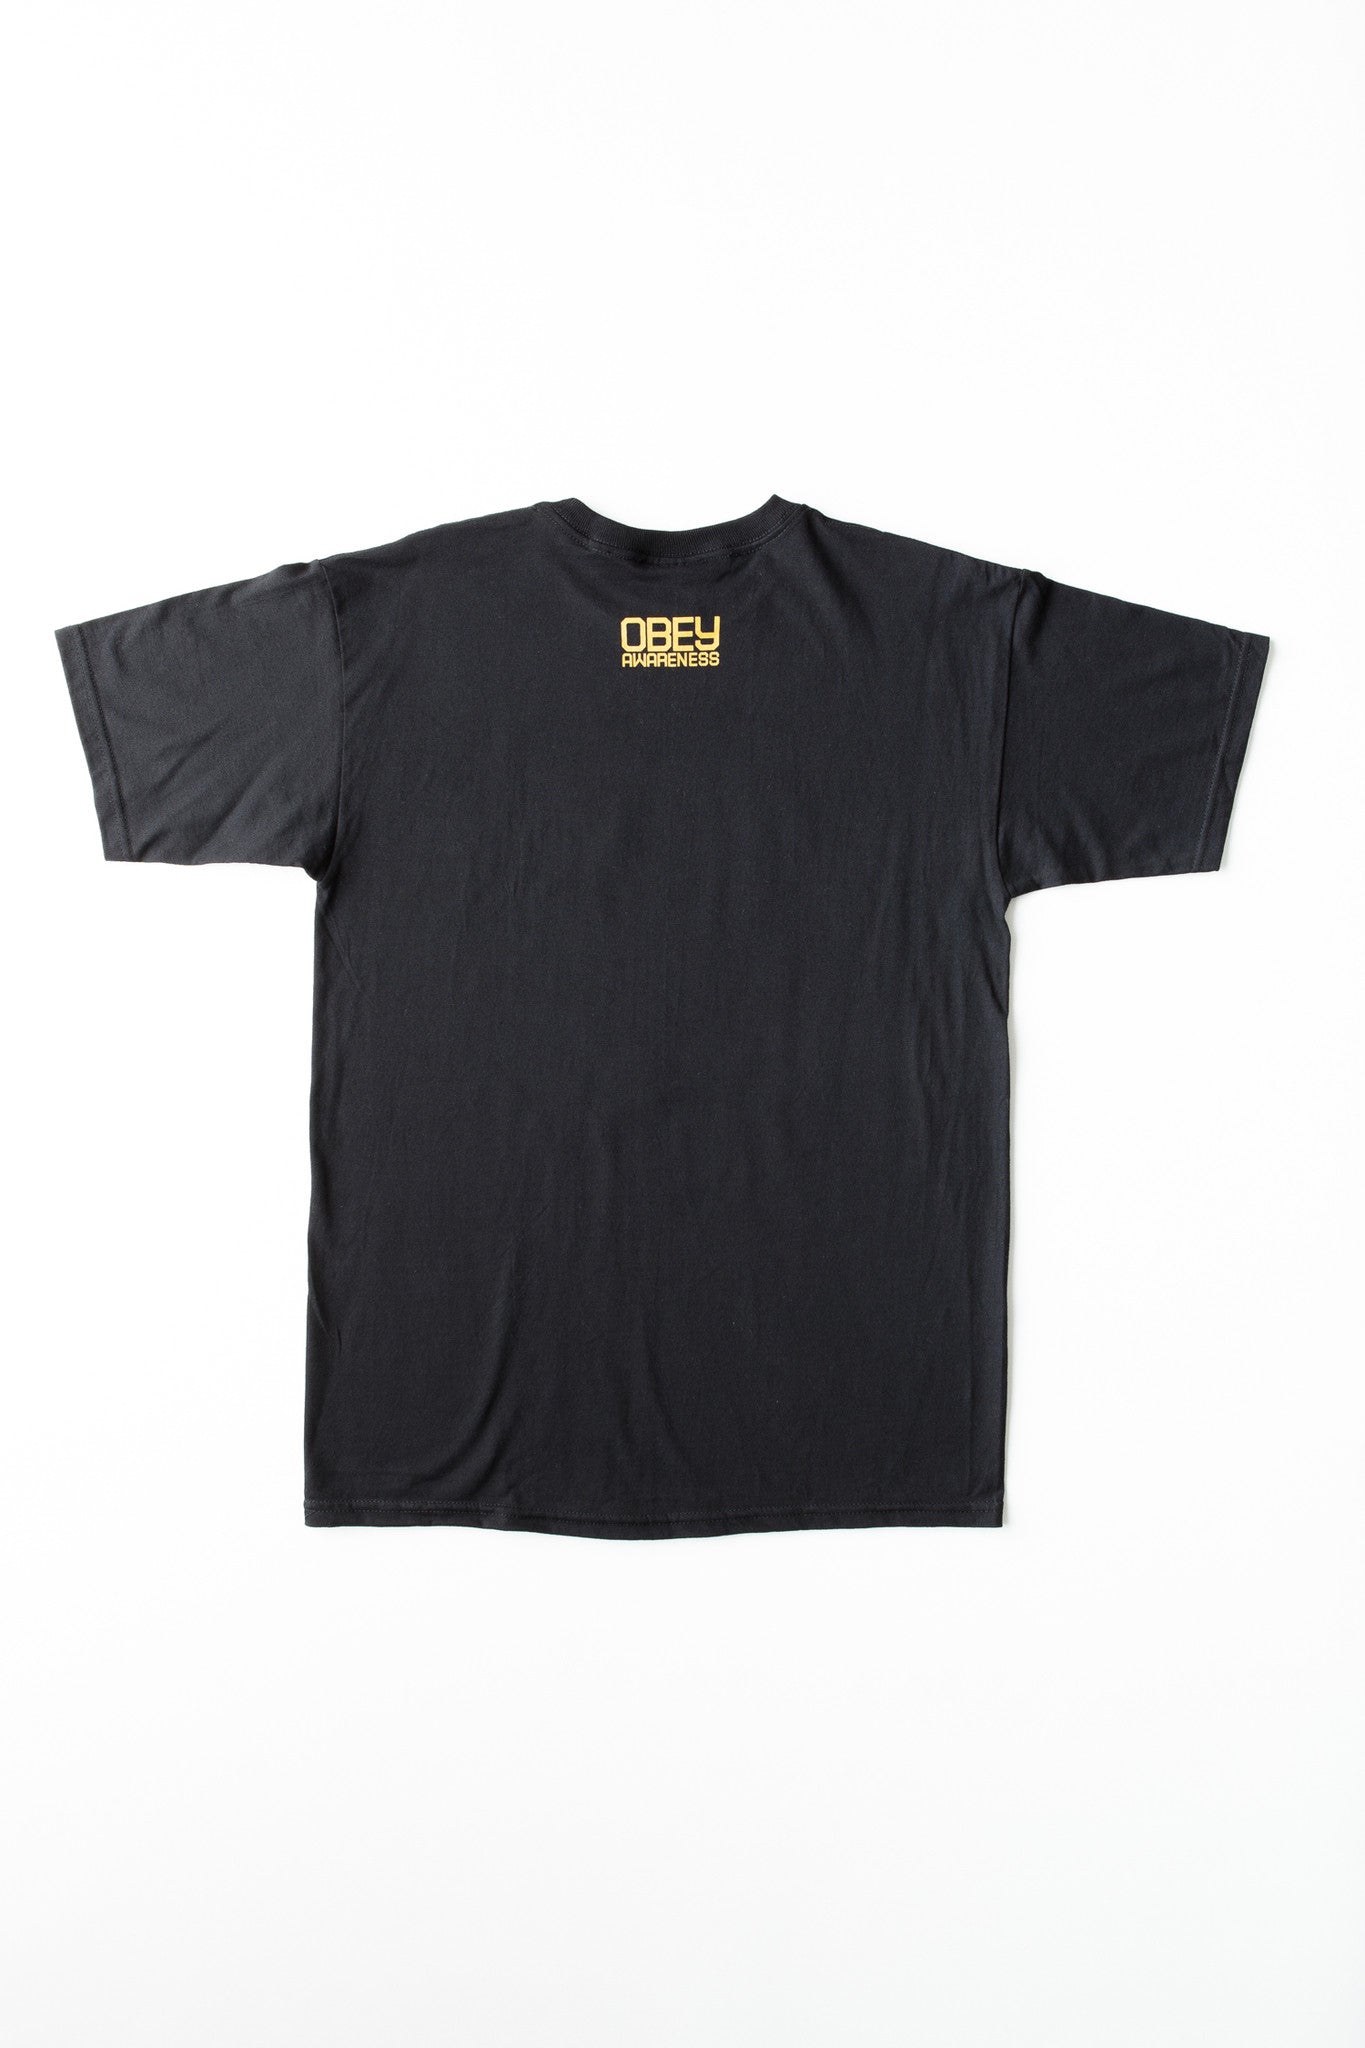 OBEY - Joe Strummer Foundation Men's Shirt, Black - The Giant Peach